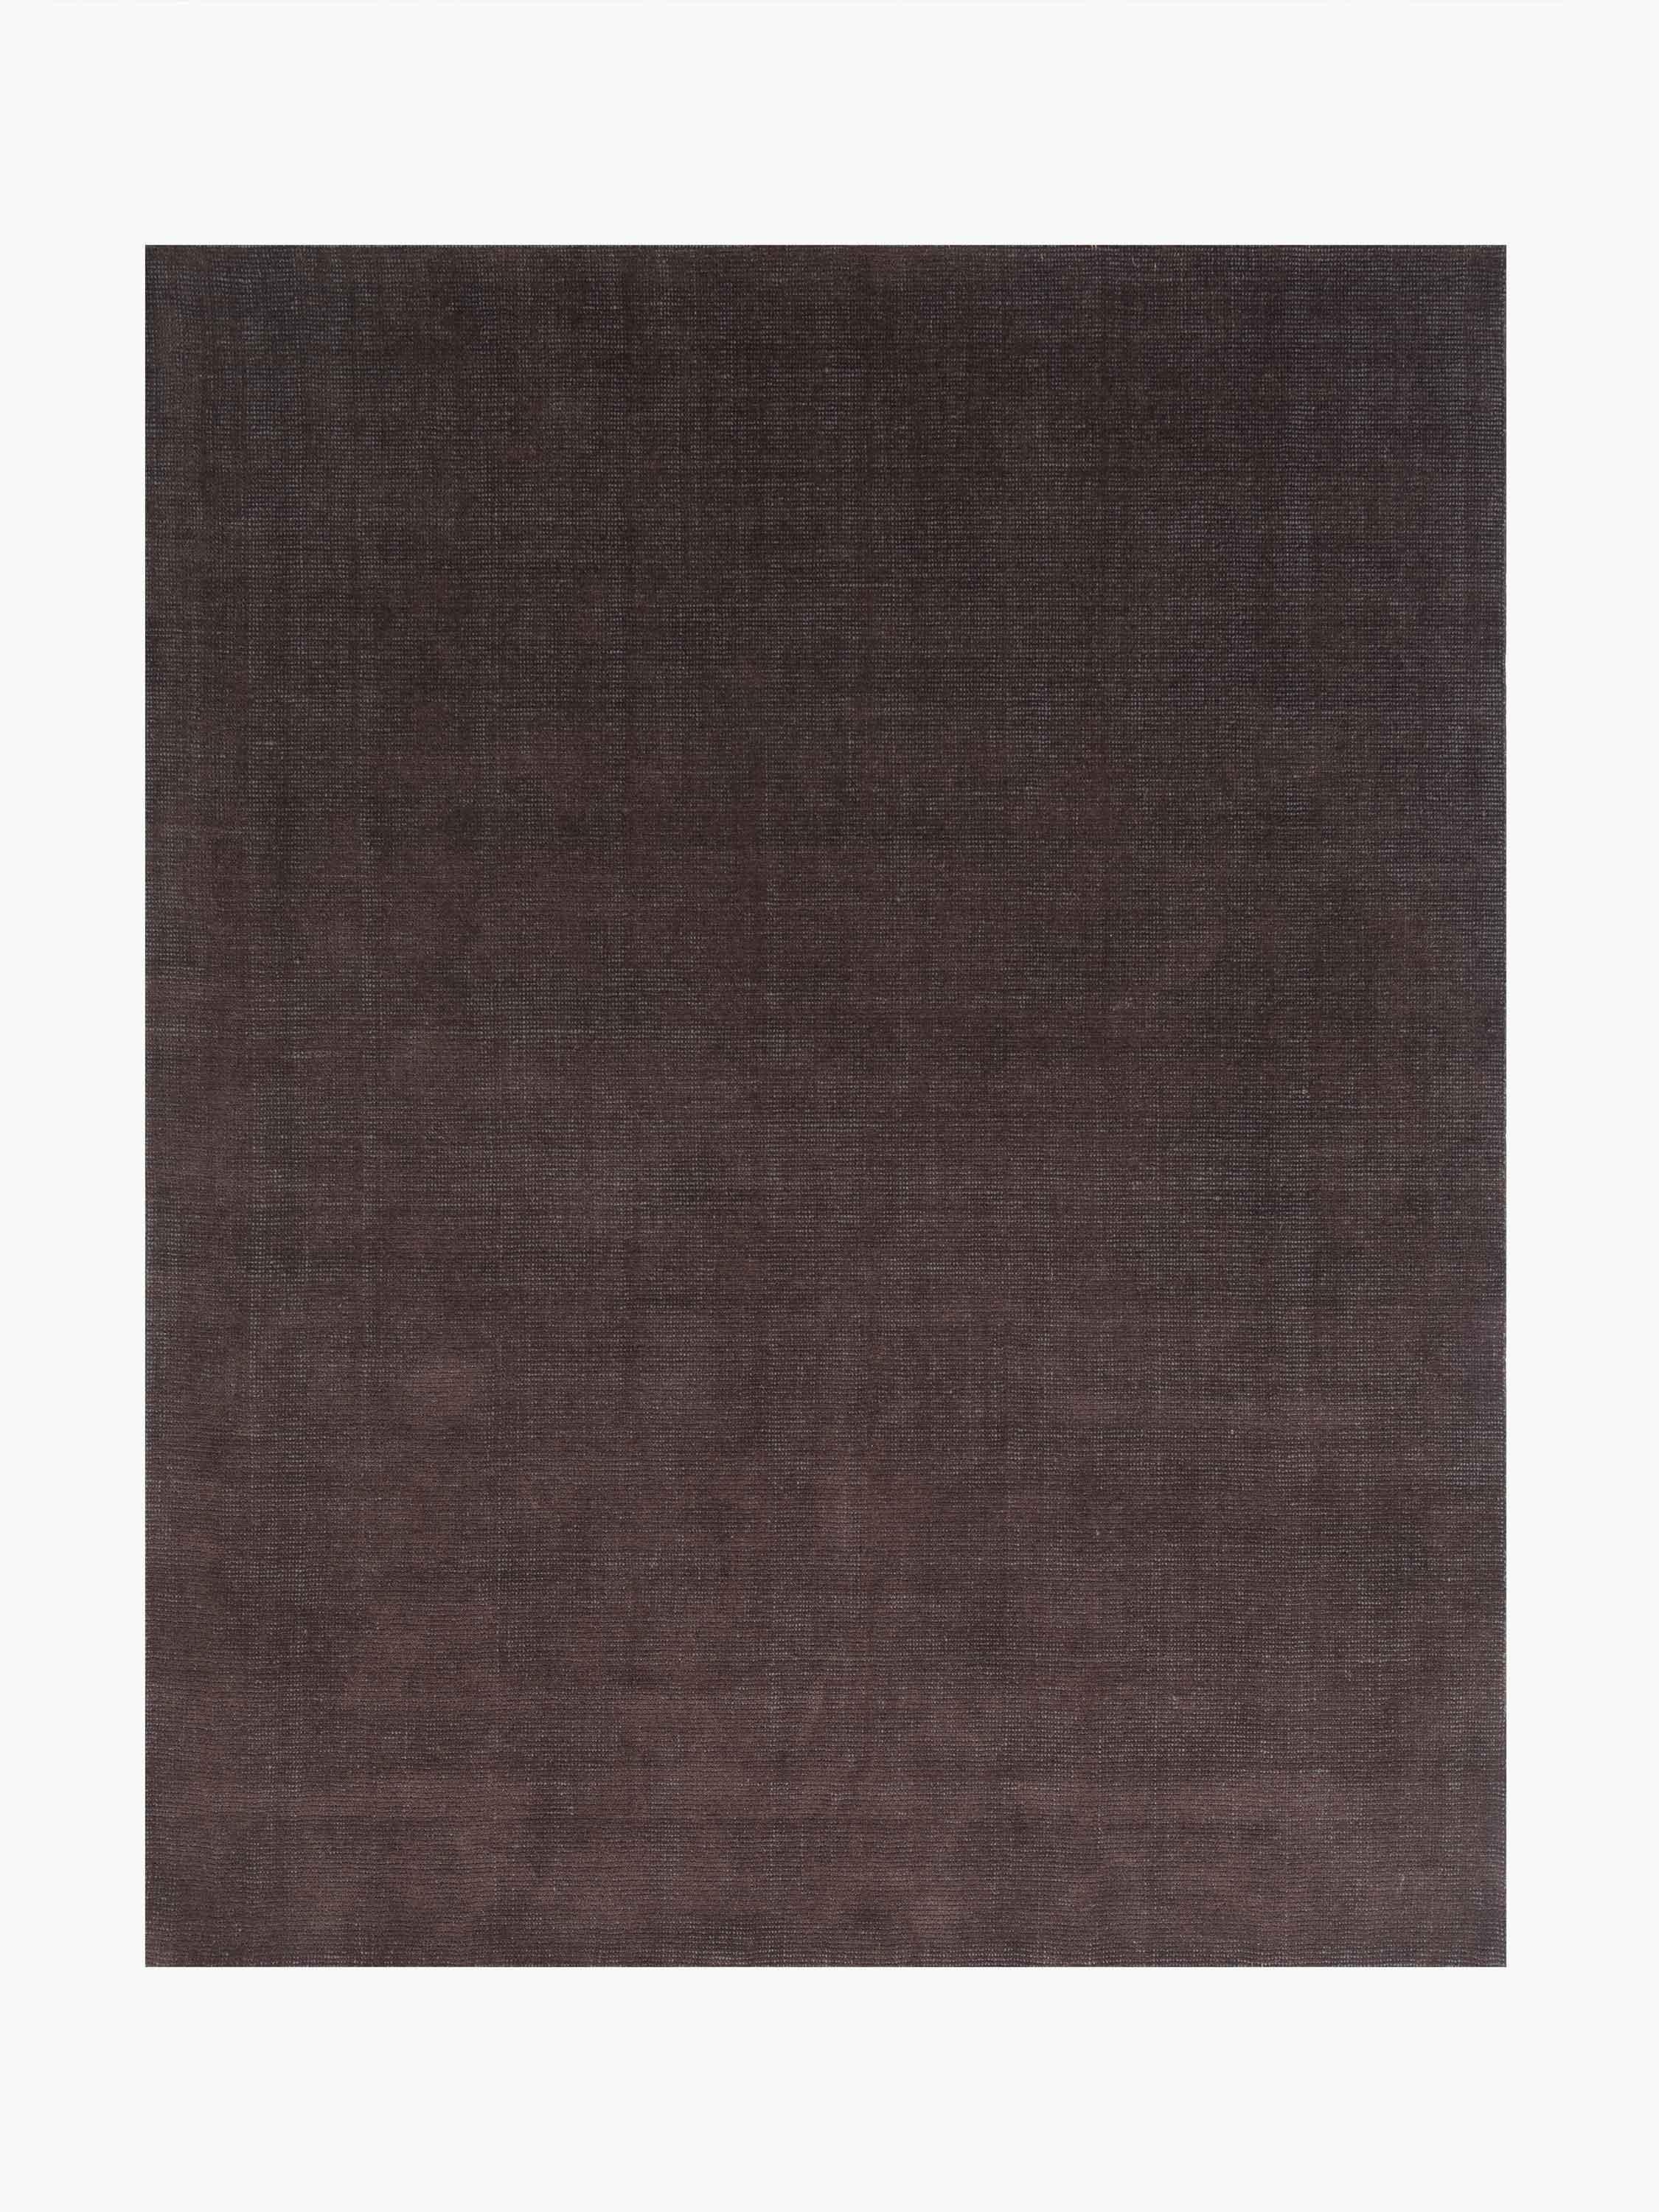 For Sale: Brown (Distressed Wool Espresso) Ben Soleimani Laria Rug– Handcrafted Wool + Silk Fog 9'x12' 3